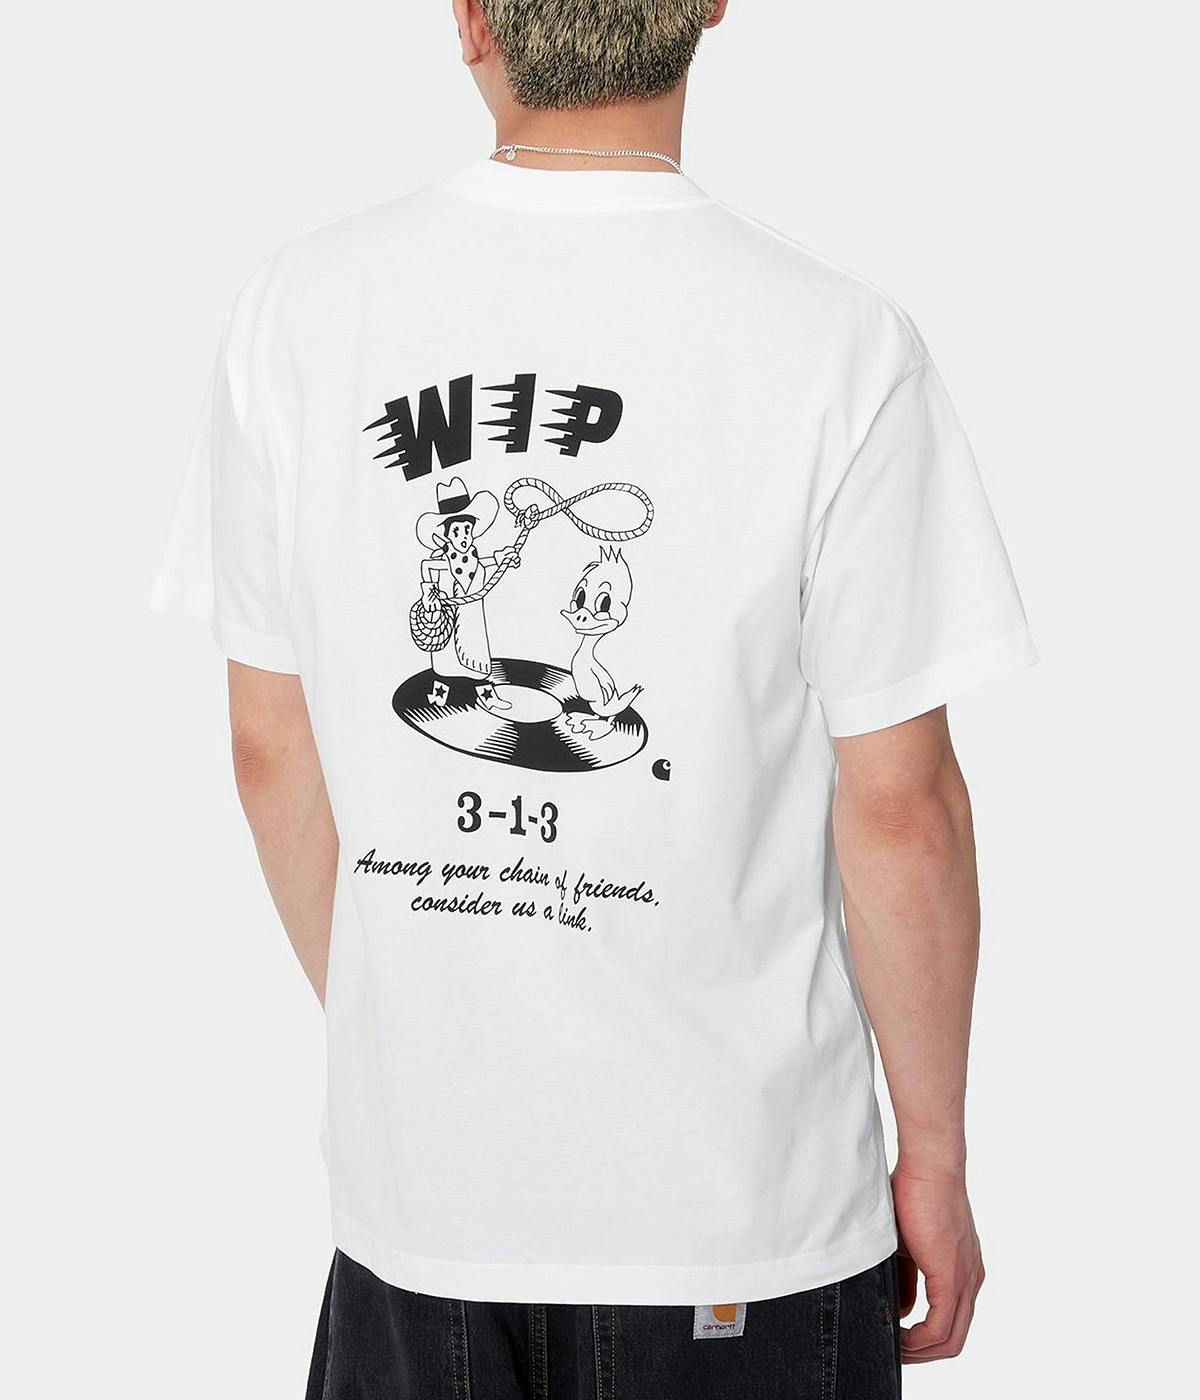 Carhartt T-shirt S/S Friendship White / Black